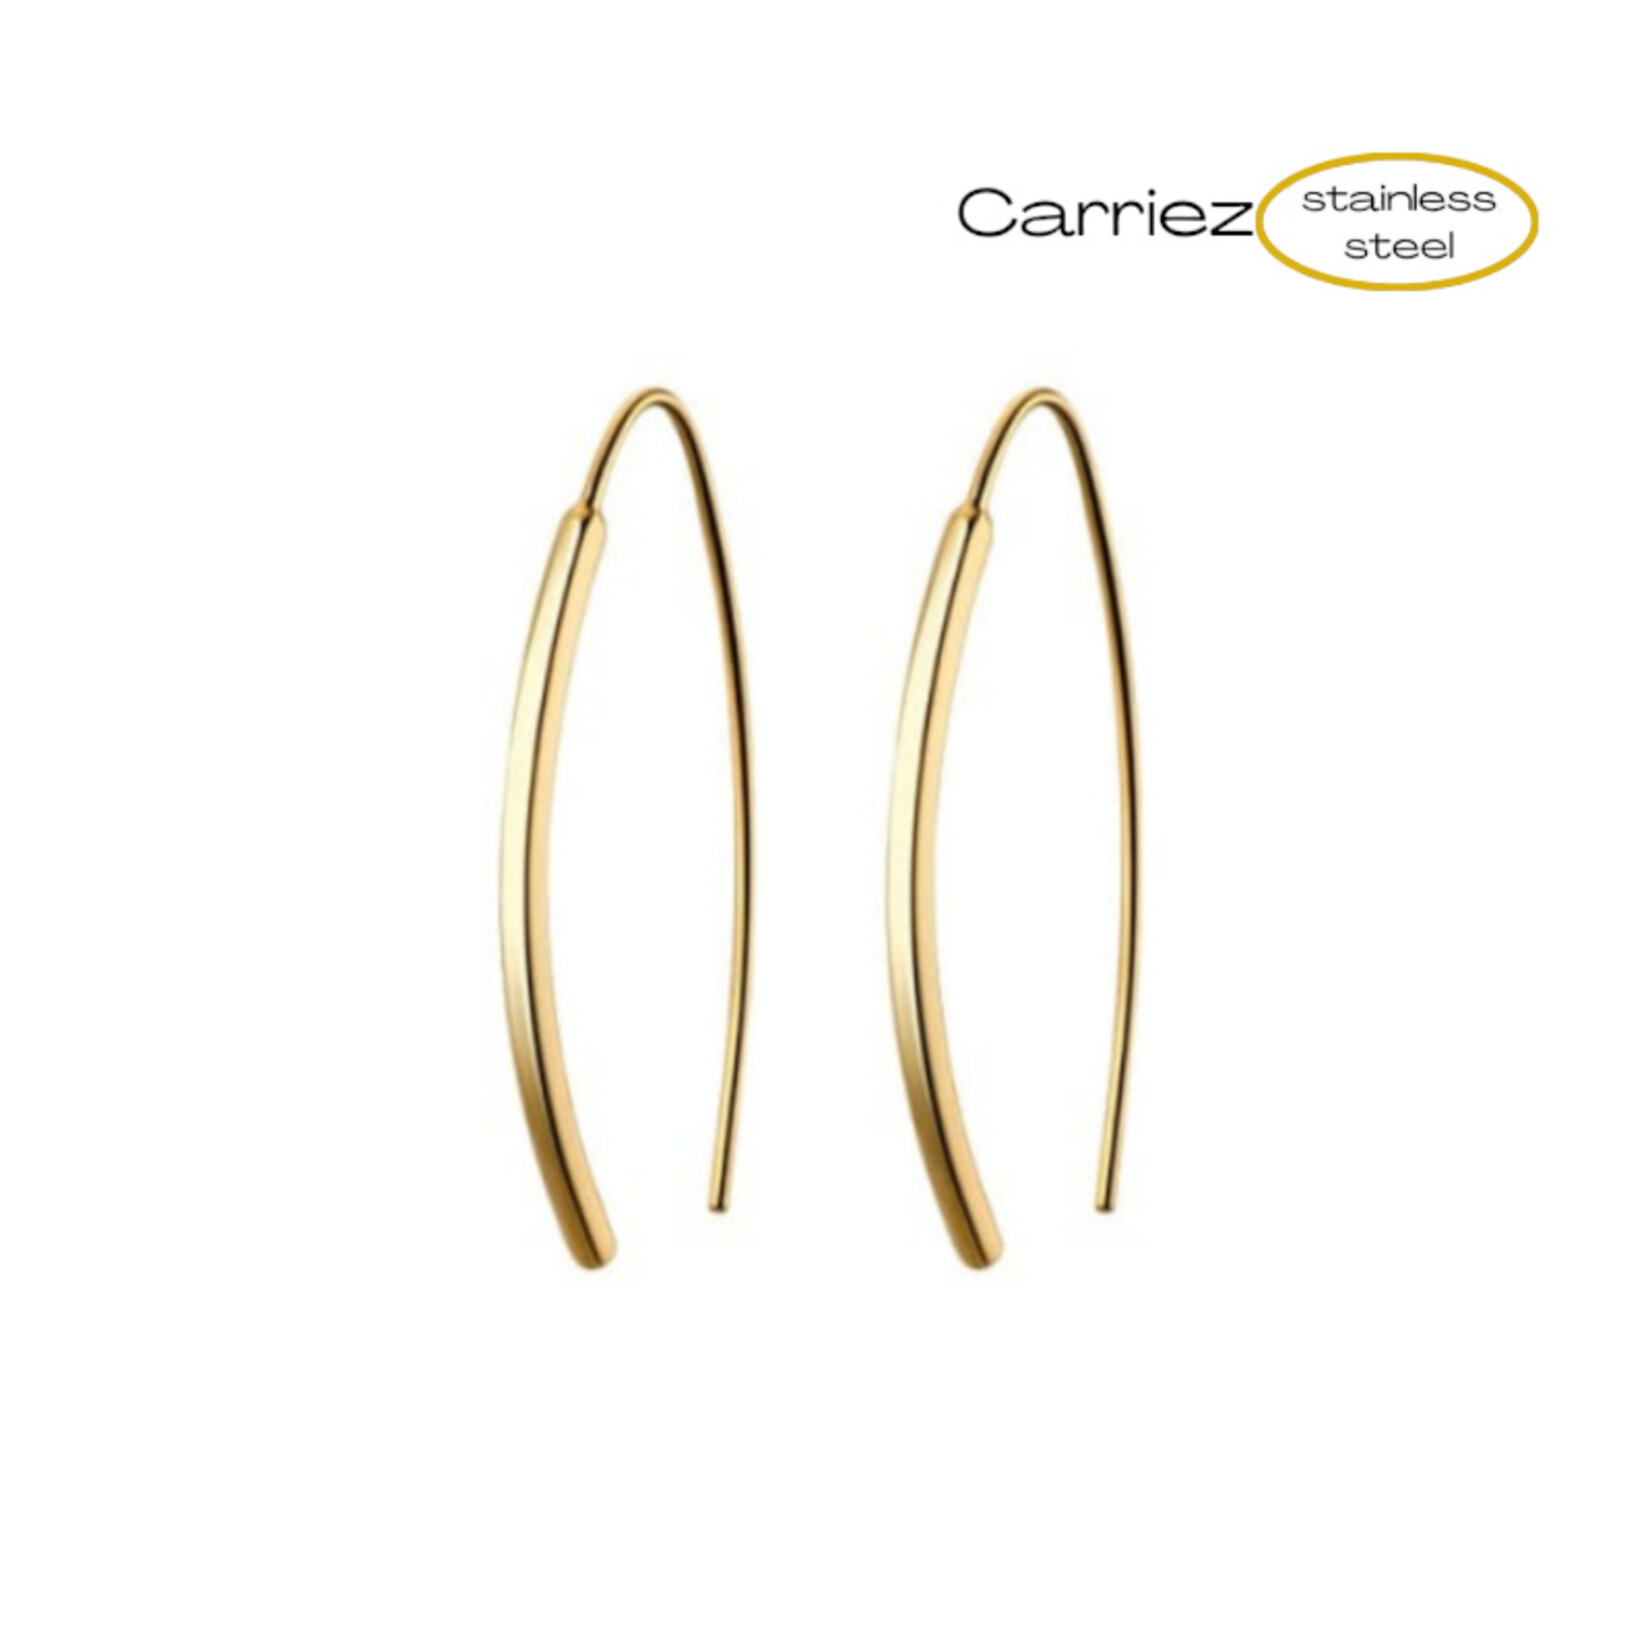 Carriez  gold plated ovalen haak oorhangers - stainless steel